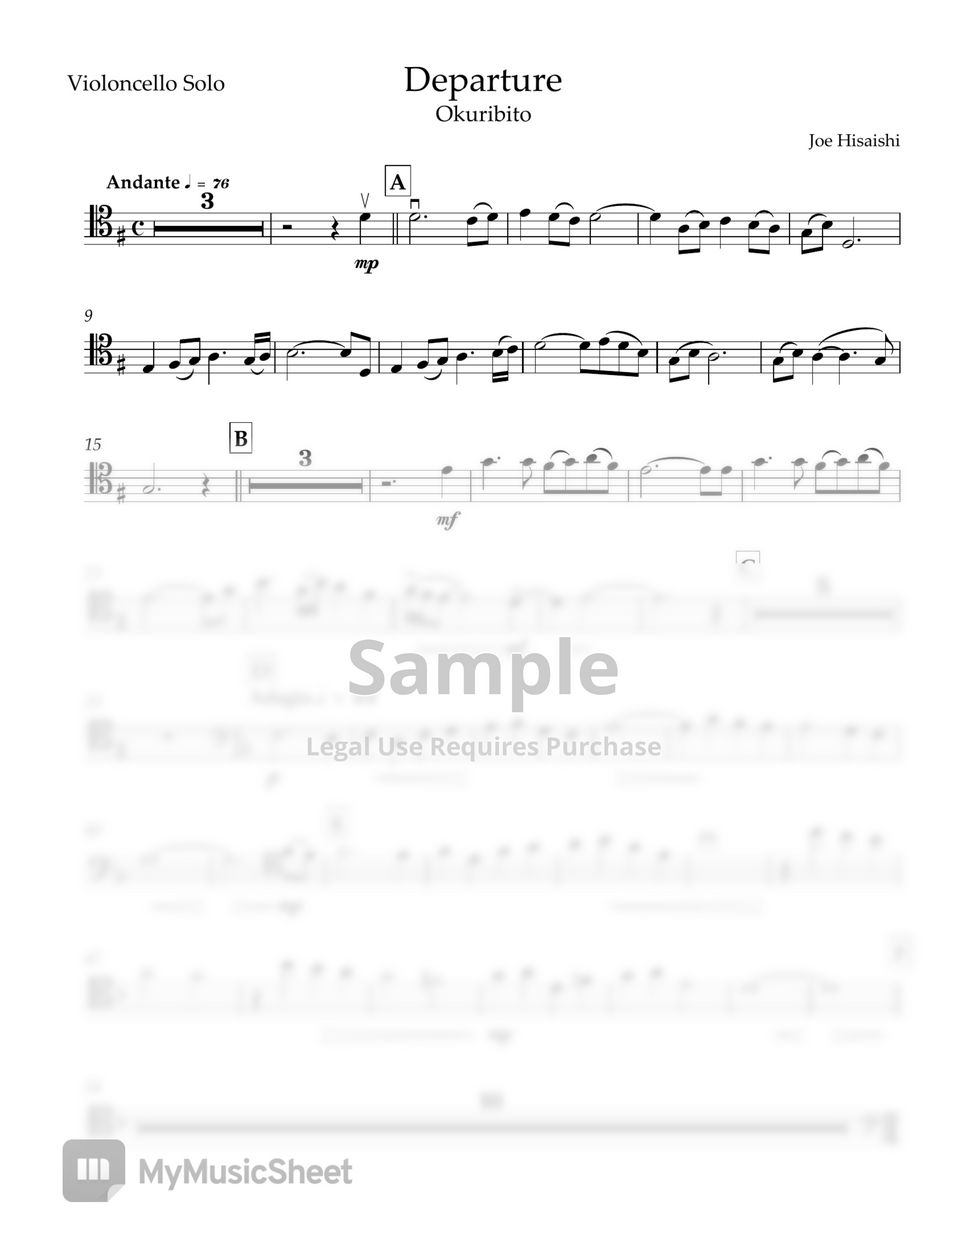 Joe Hisaishi - Departure - Melodyphony for Cello solo by Hai Mai